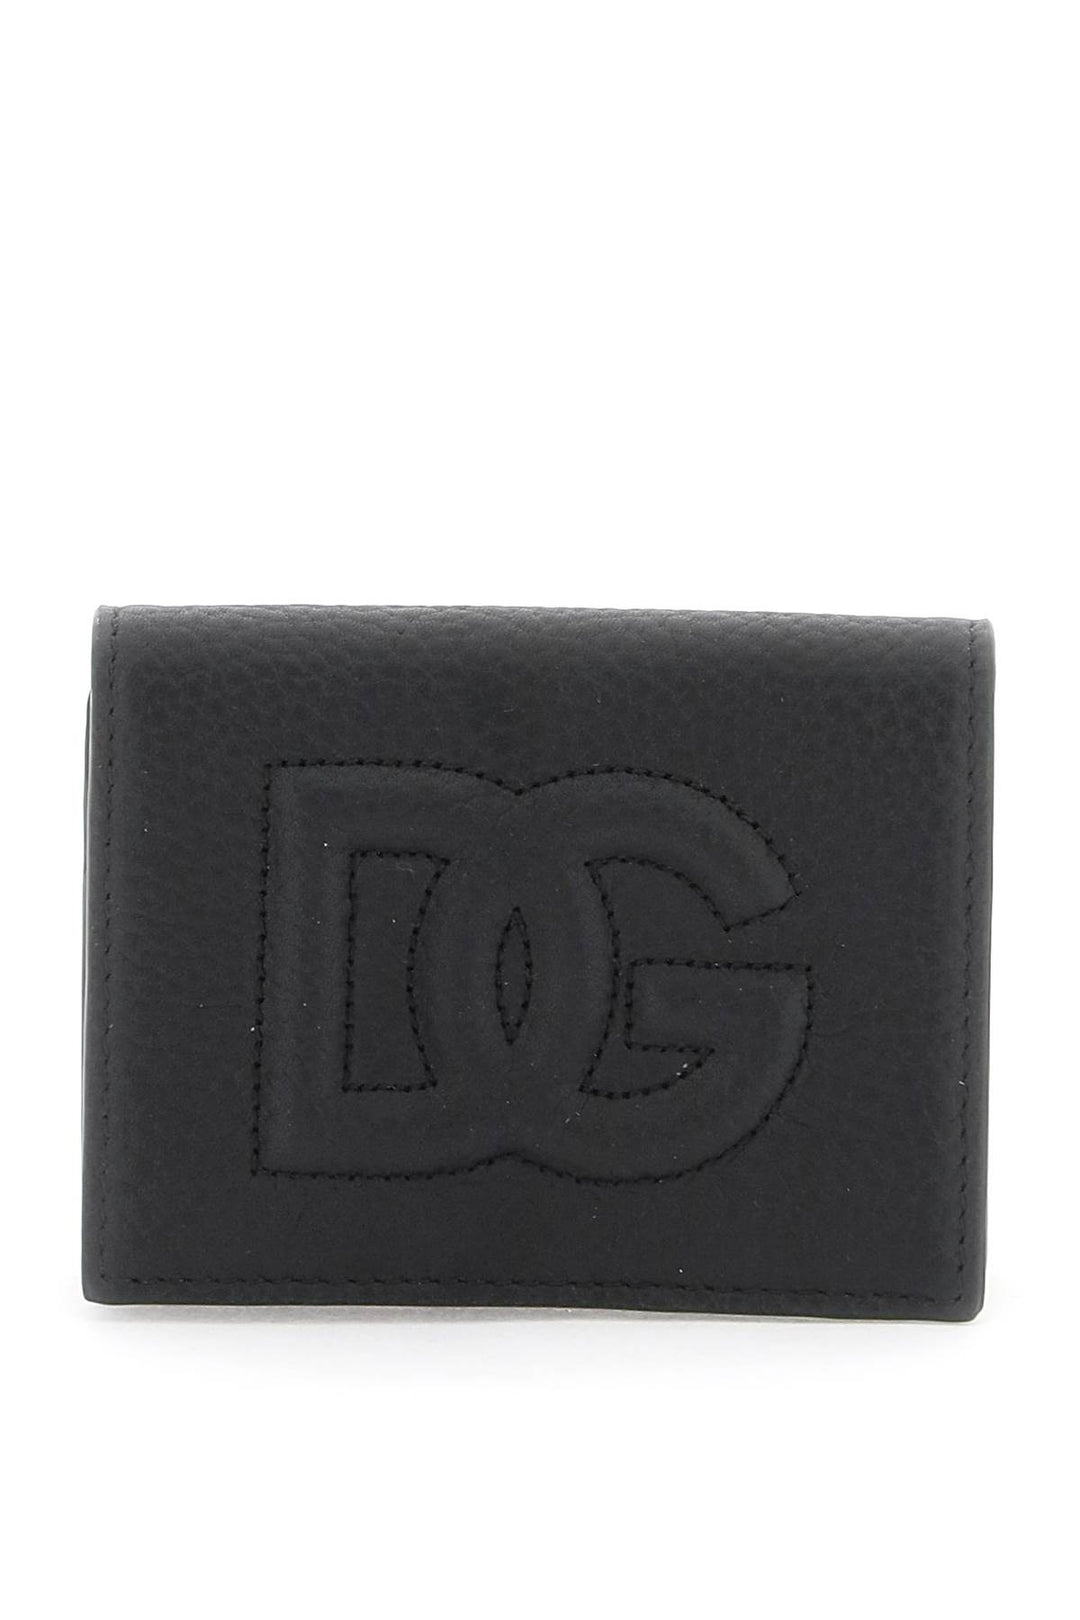 Dolce & Gabbana Dg Logo Card Holder   Nero